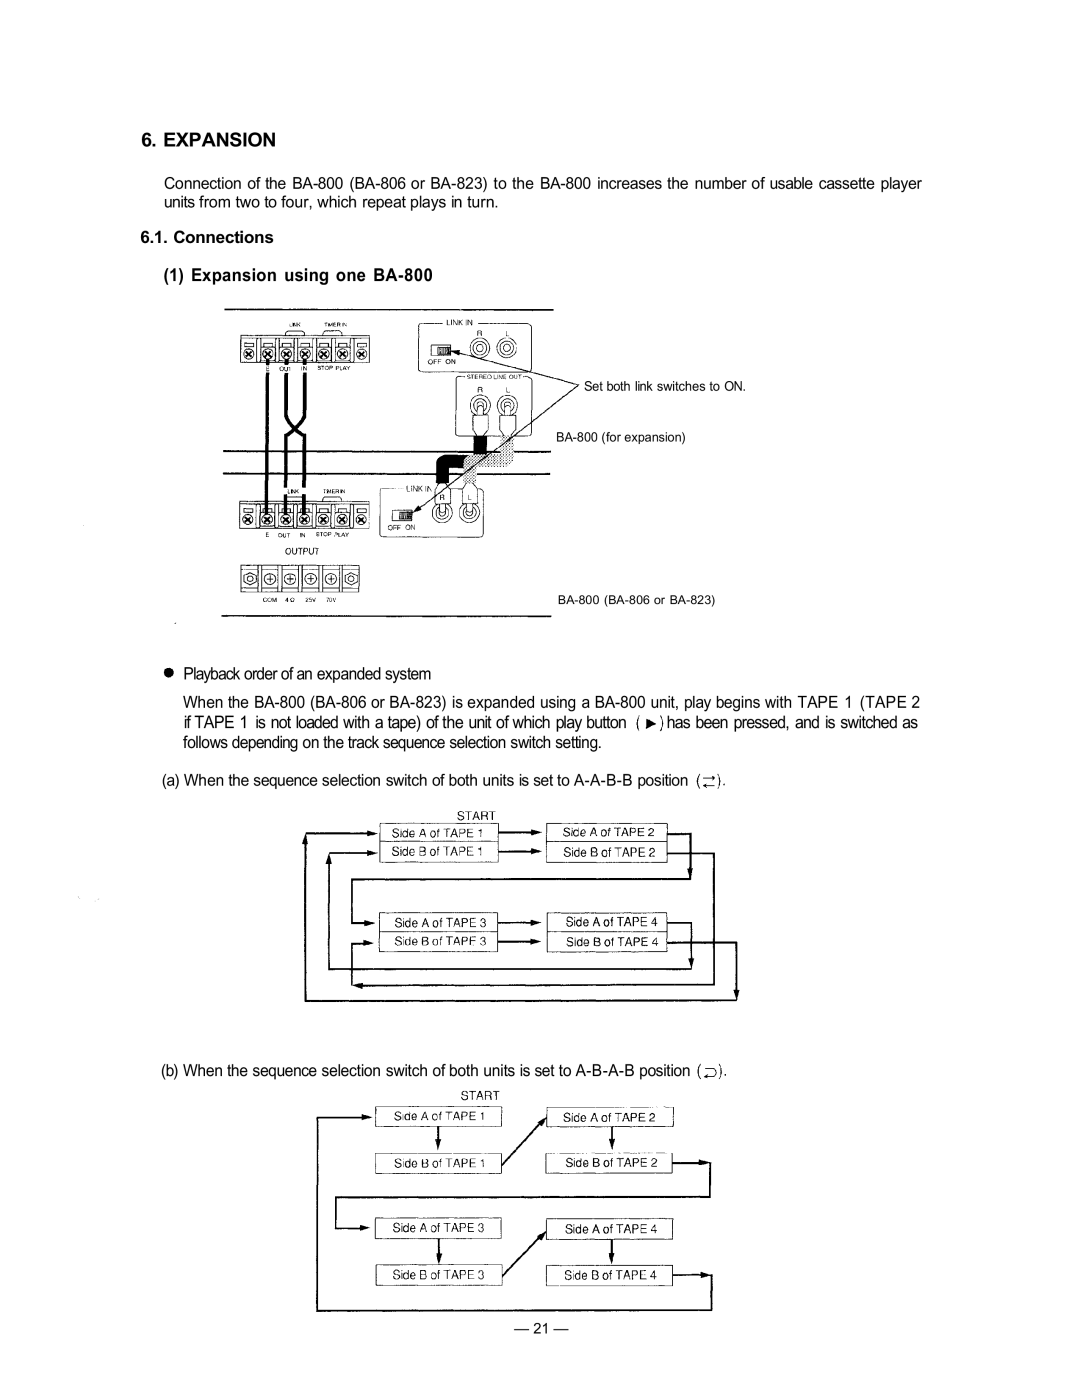 TOA Electronics manual 1Expansion using one BA-800 